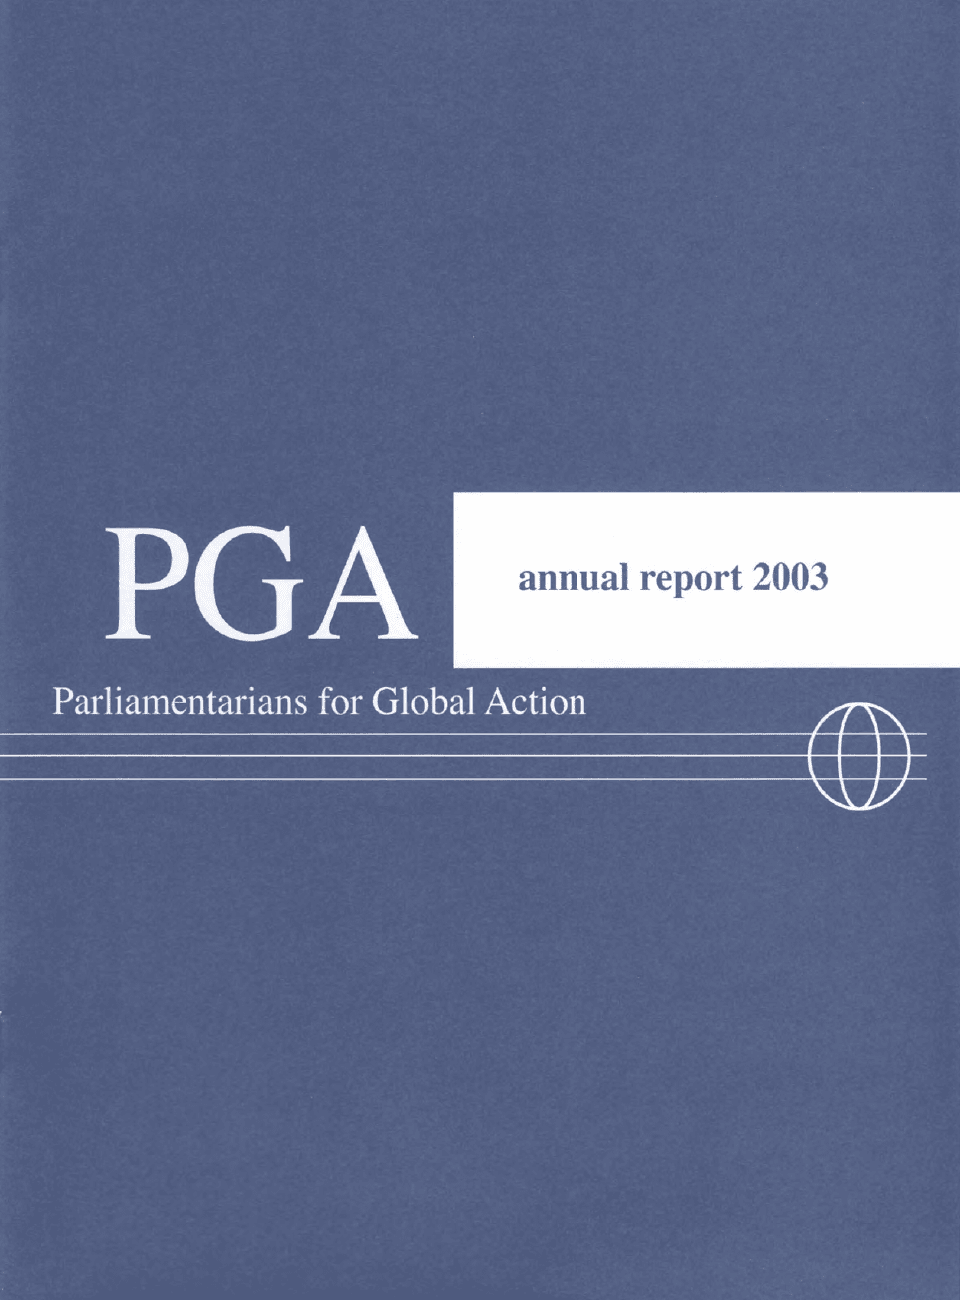 Rapport annuel de PGA 2003